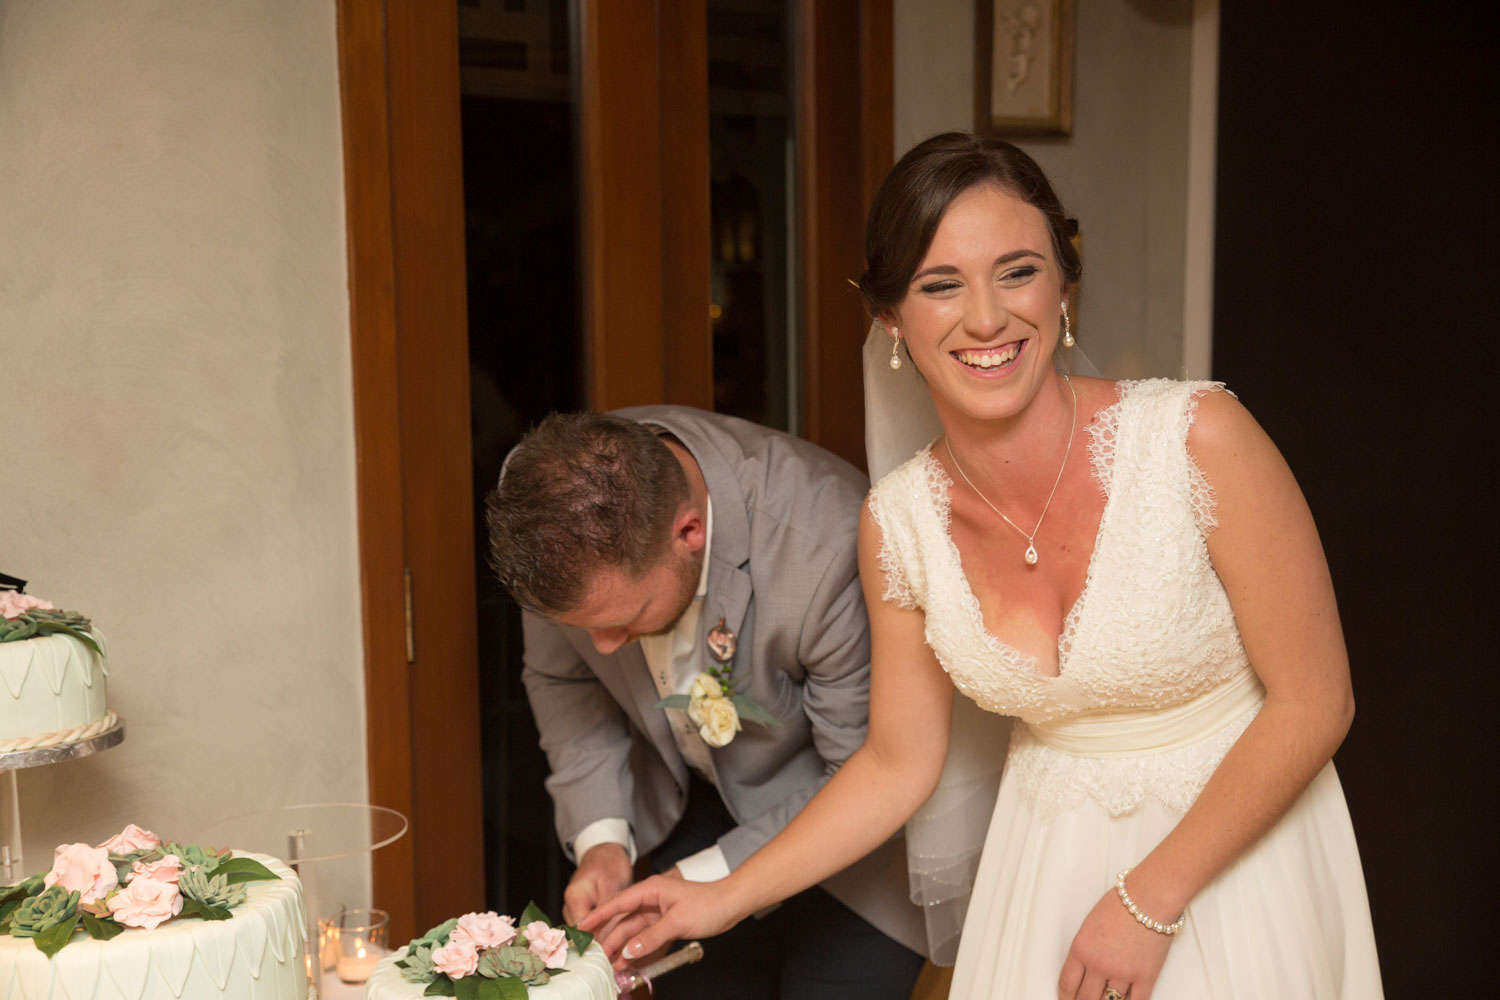 couple cake cutting wedding reception